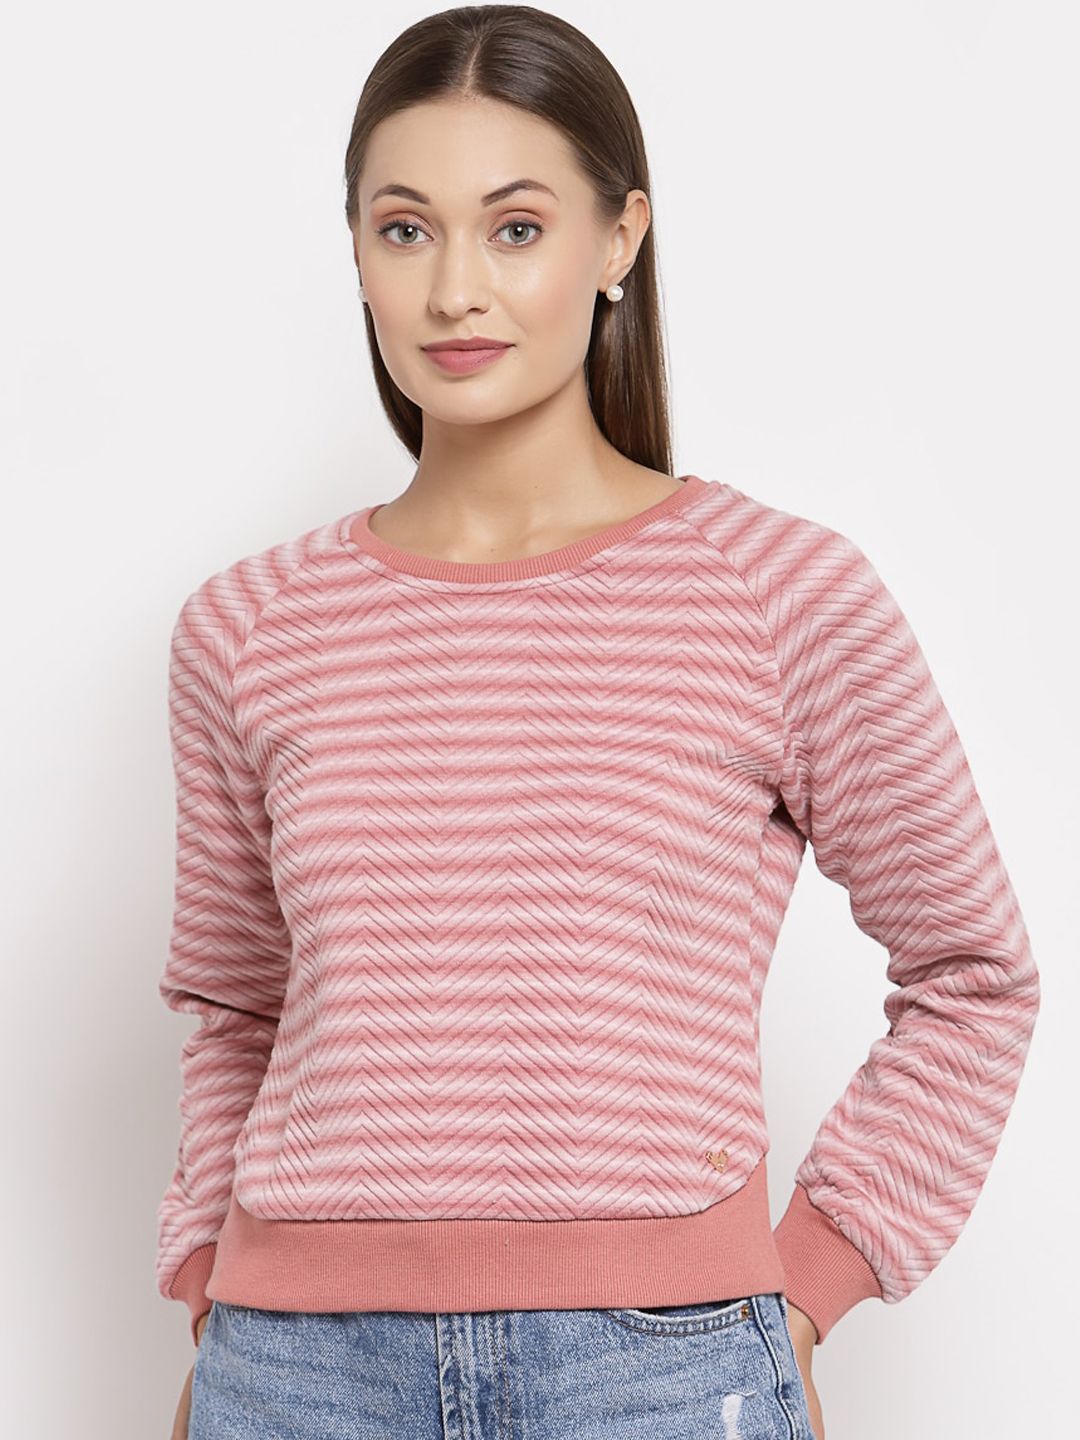 Juelle Women Pink Striped Sweatshirt Price in India